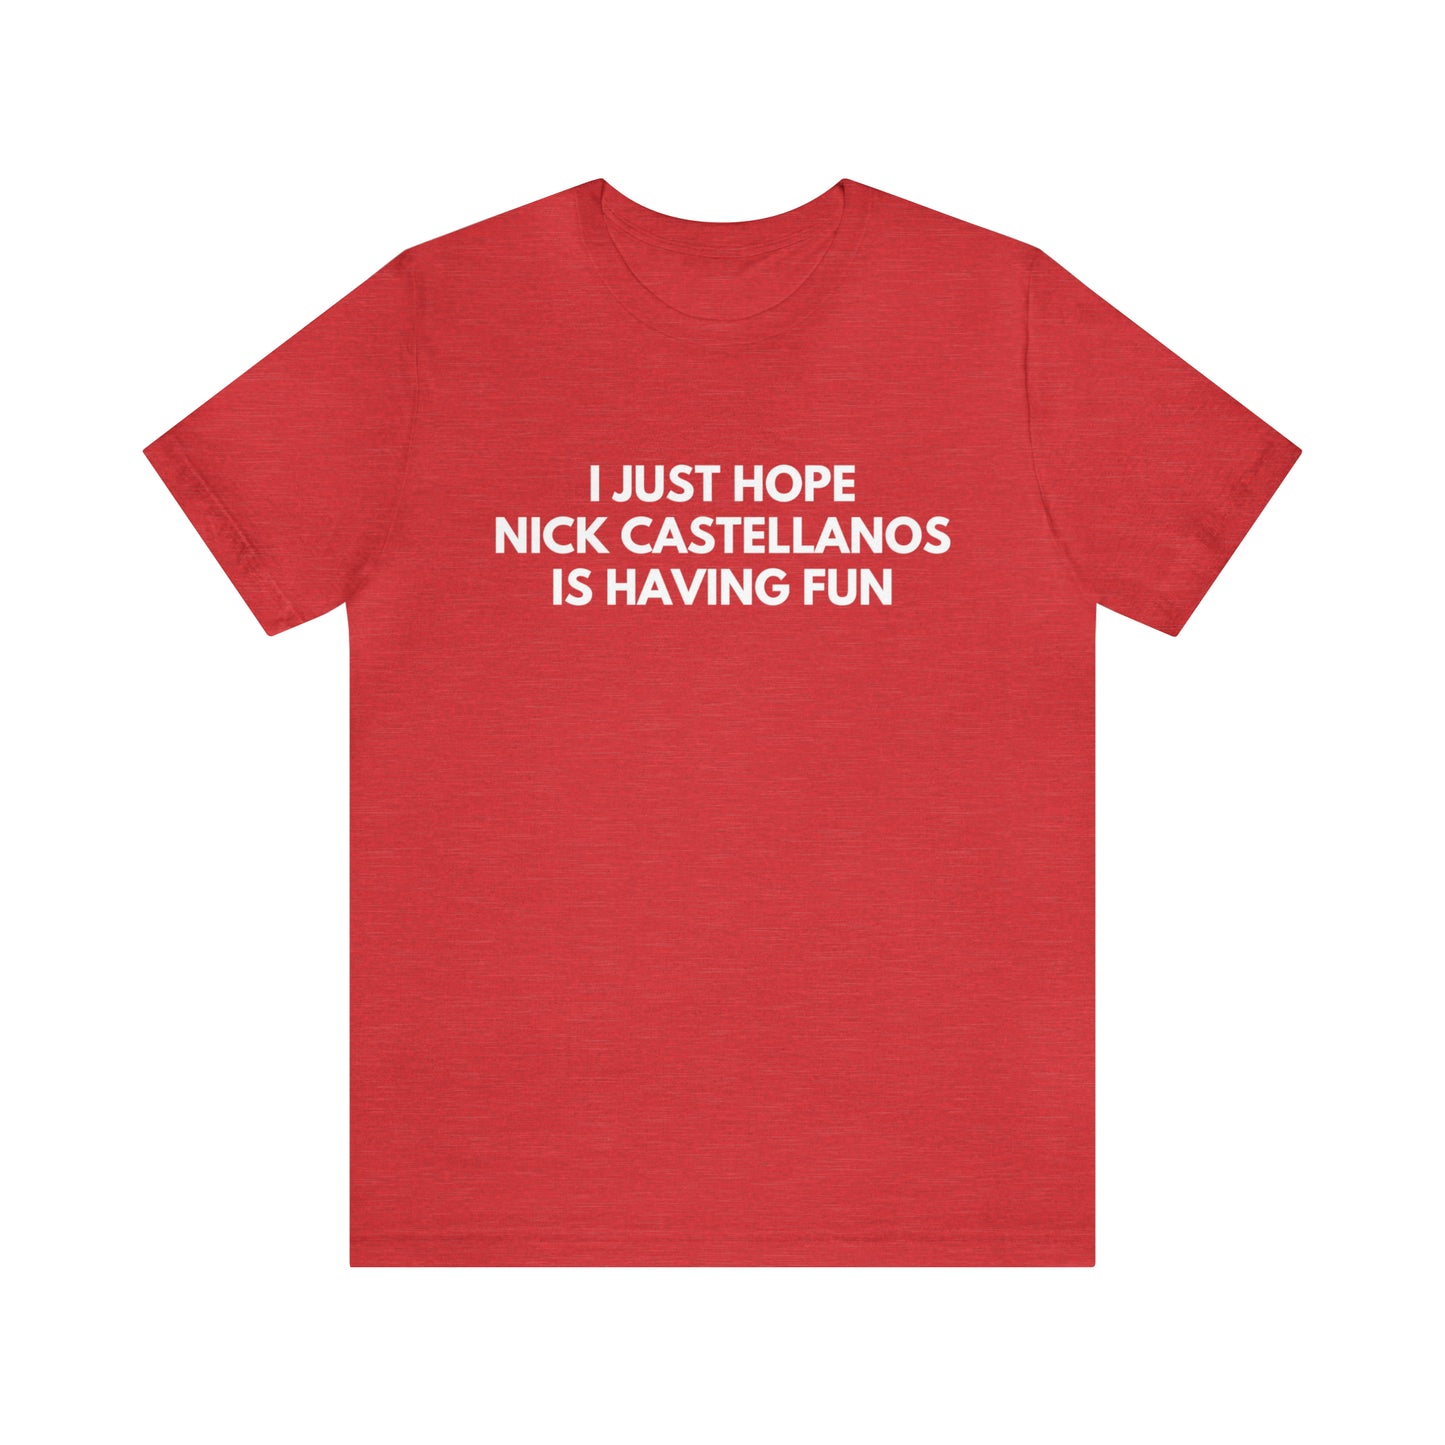 Nick Castellanos Having Fun - Unisex T-Shirt